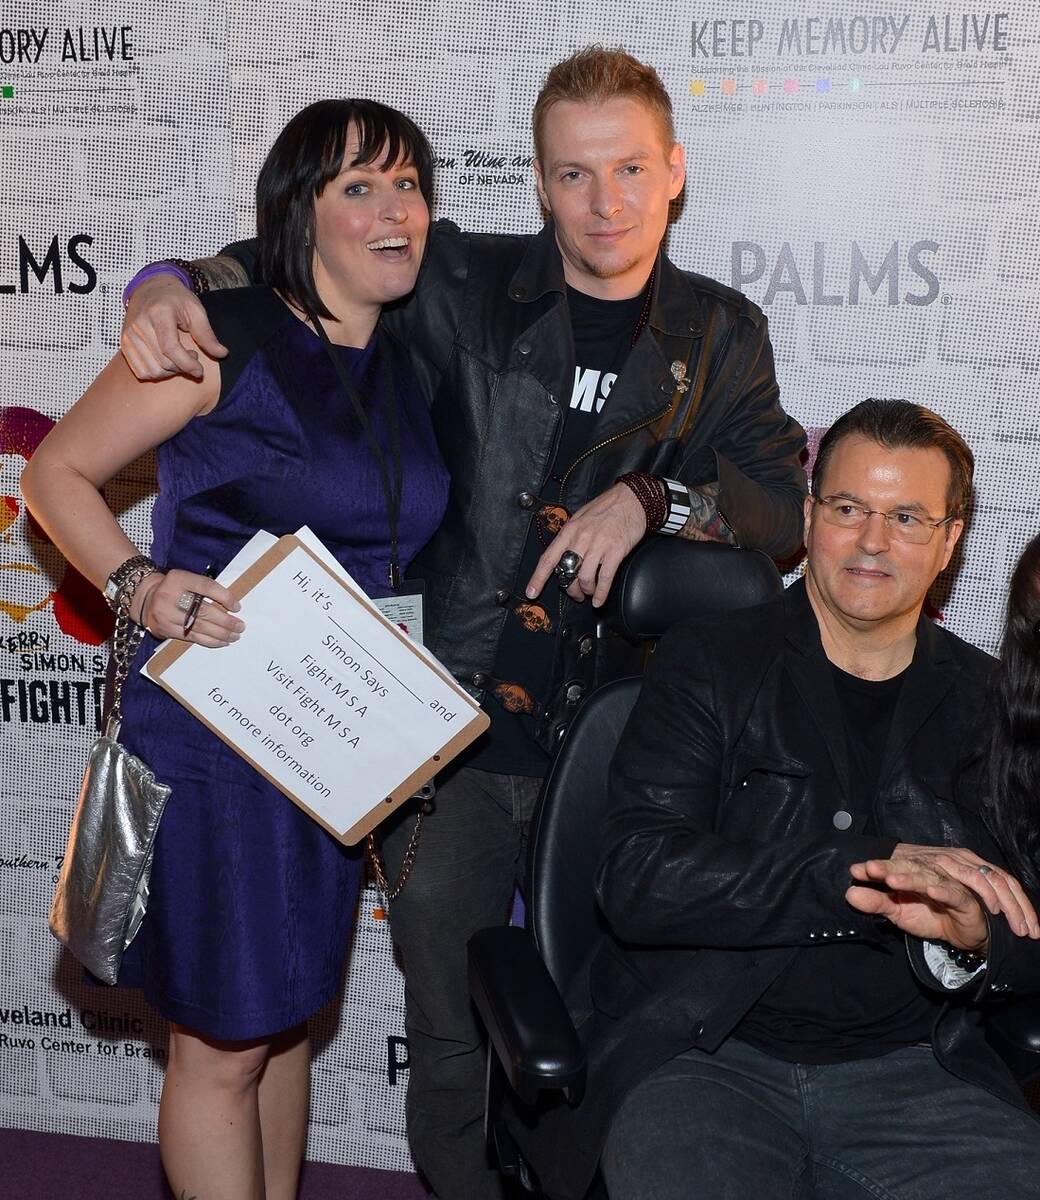 Alissa Kelly, Jason Strange and Kerry Simon are shown at Simon's "Fight MSA" fundraiser at Keep ...